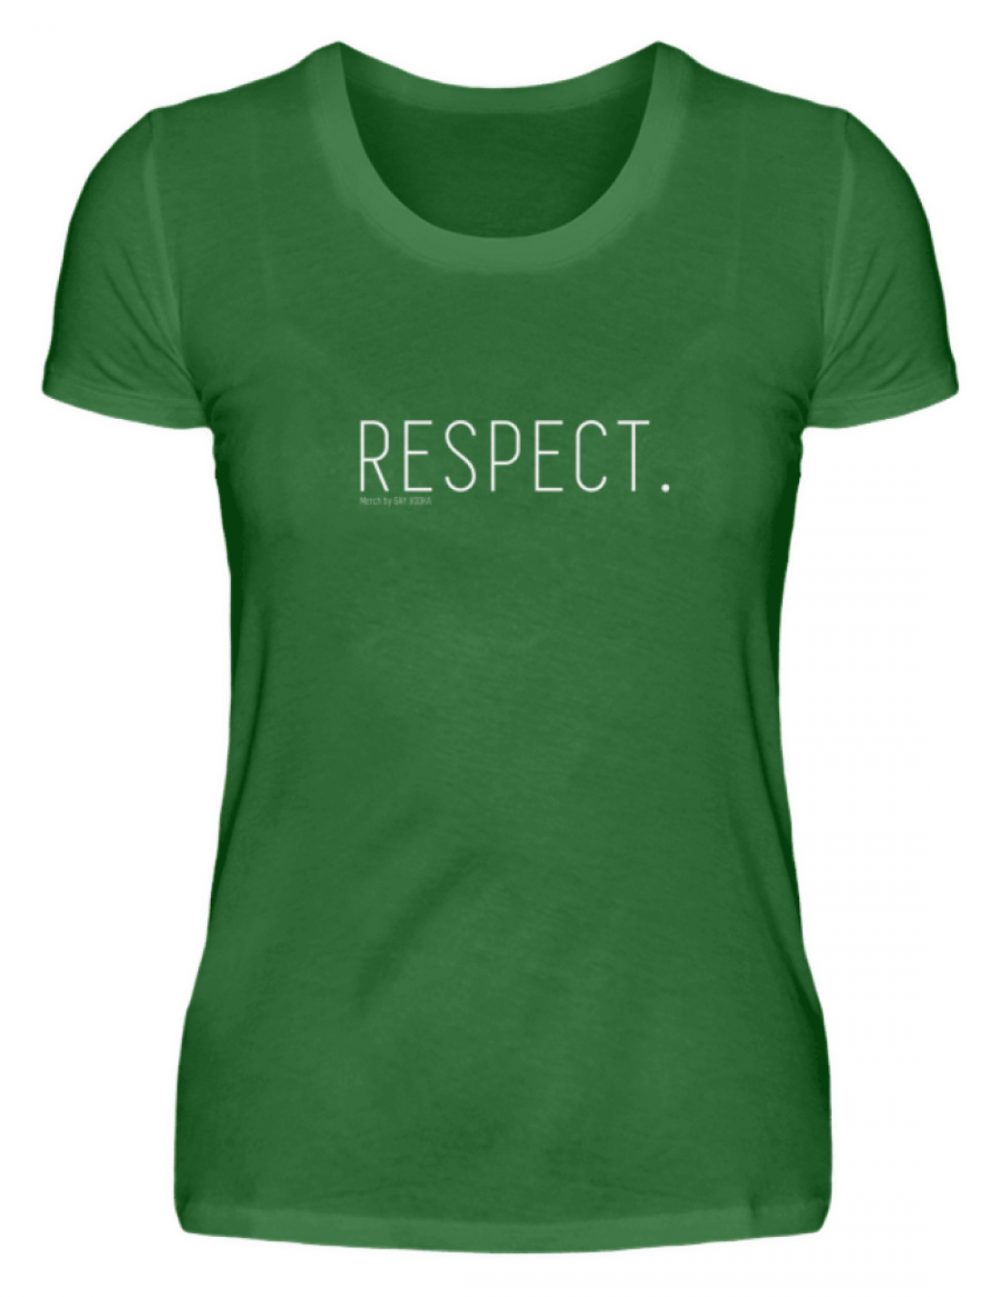 RESPECT. - Damen Premiumshirt-30